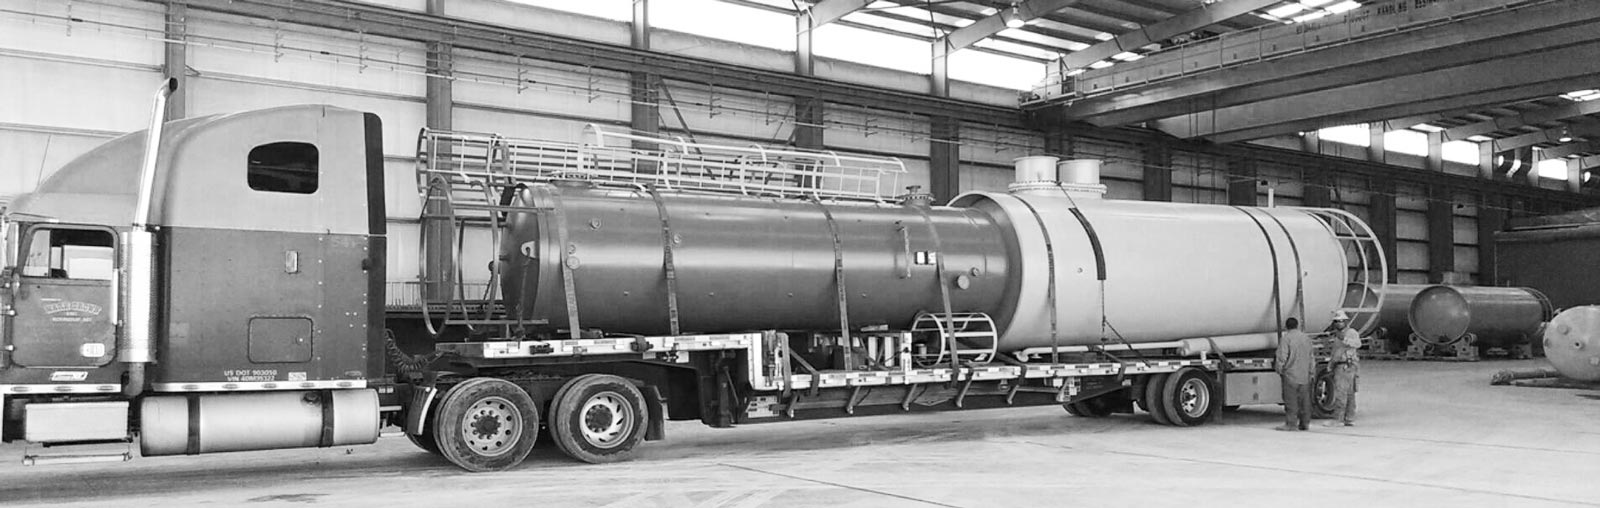 Linehaul Logistics - Transportation Delivery Trucking Services